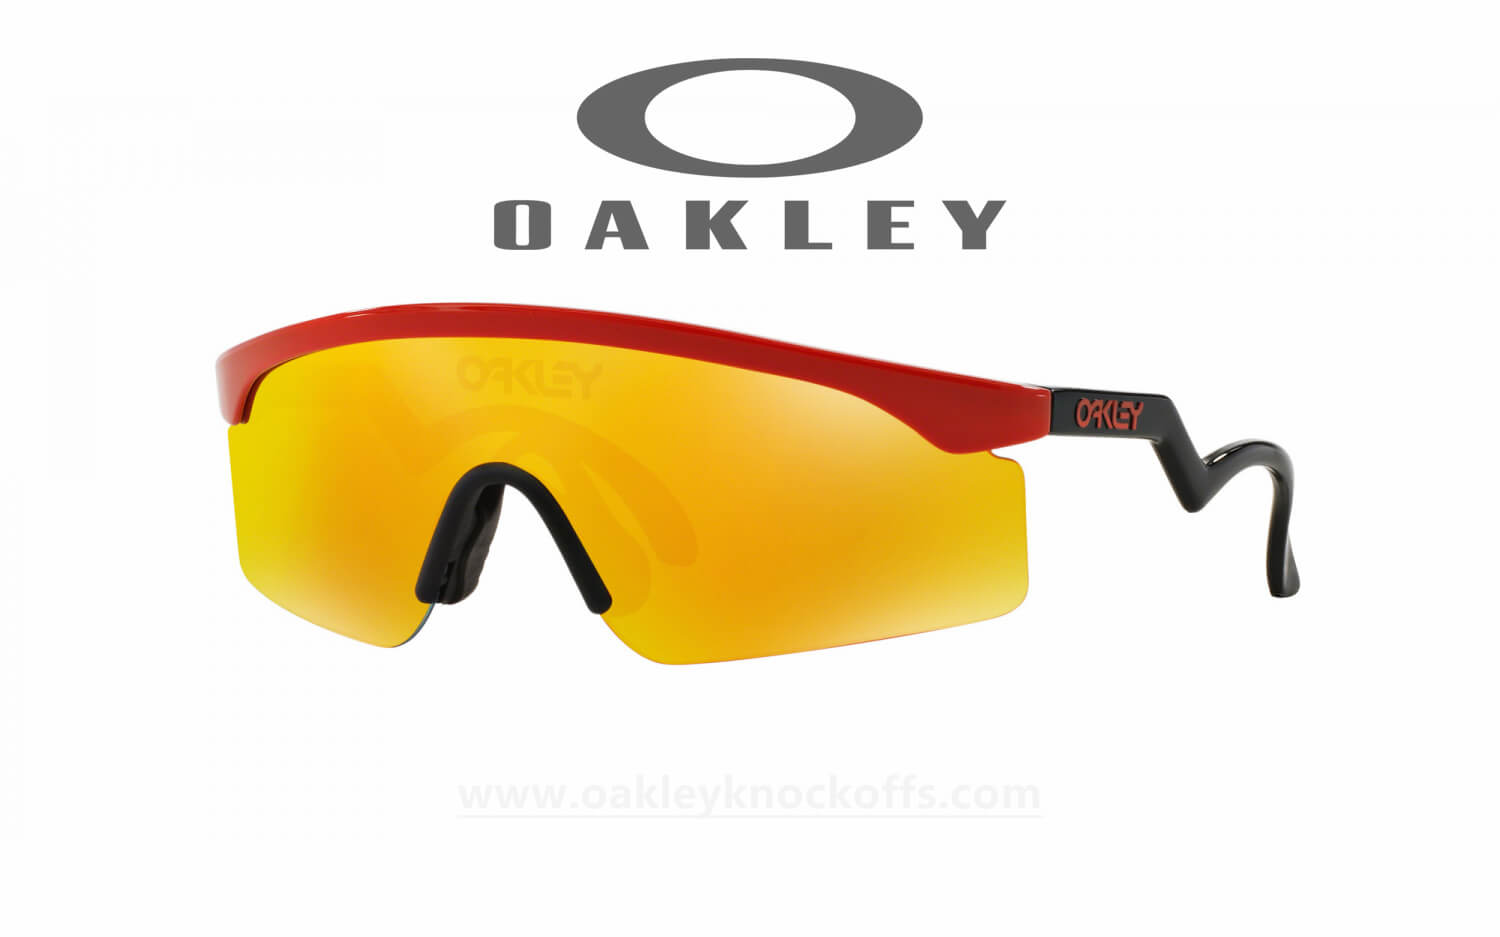 Cheap Oakley sunglasses